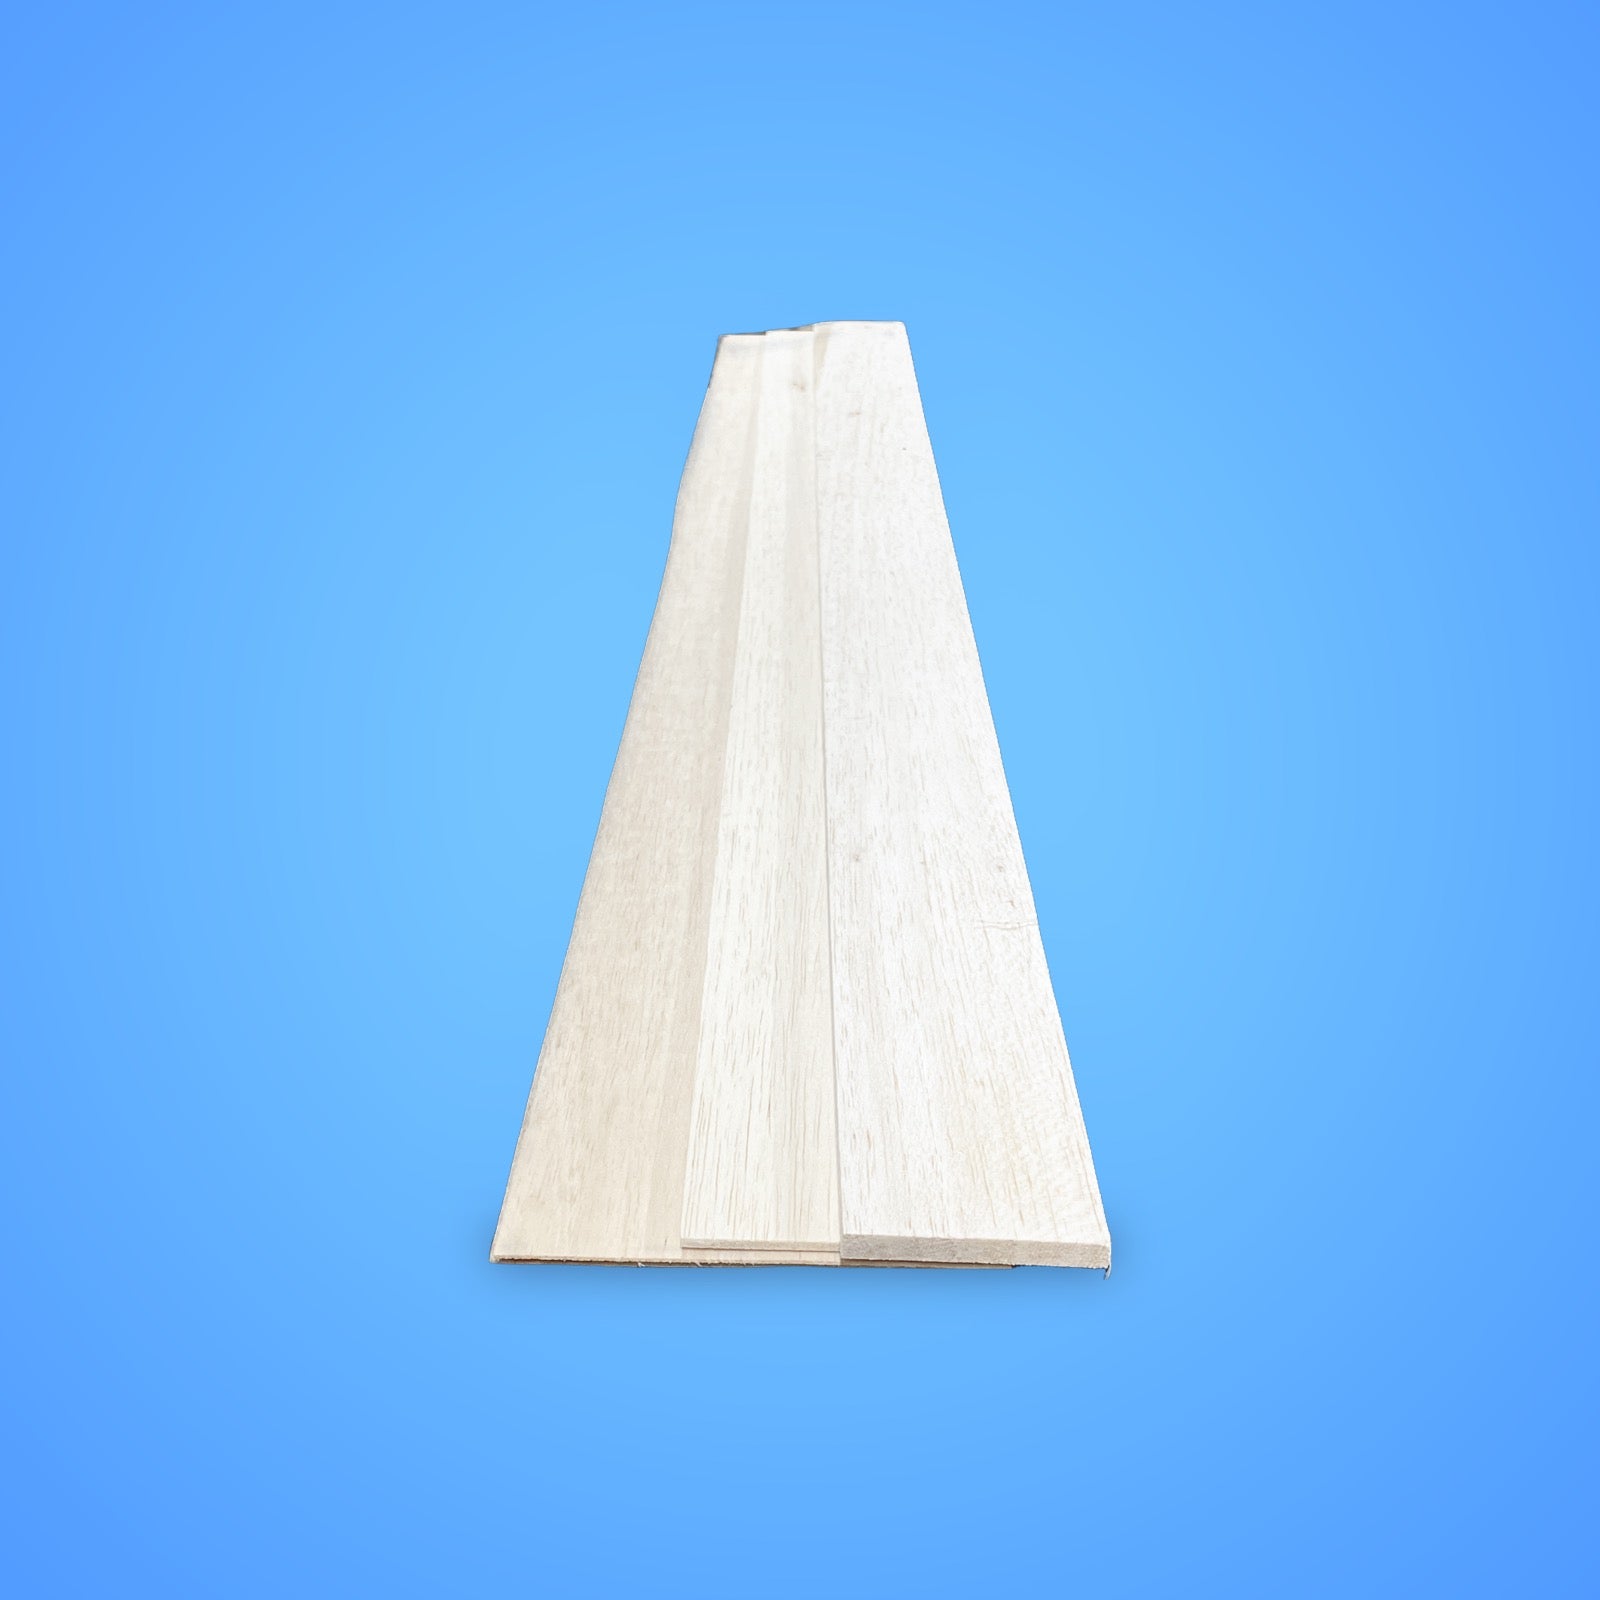 3/4 x 3 x 48 Aero Light Balsa Wood Sheets